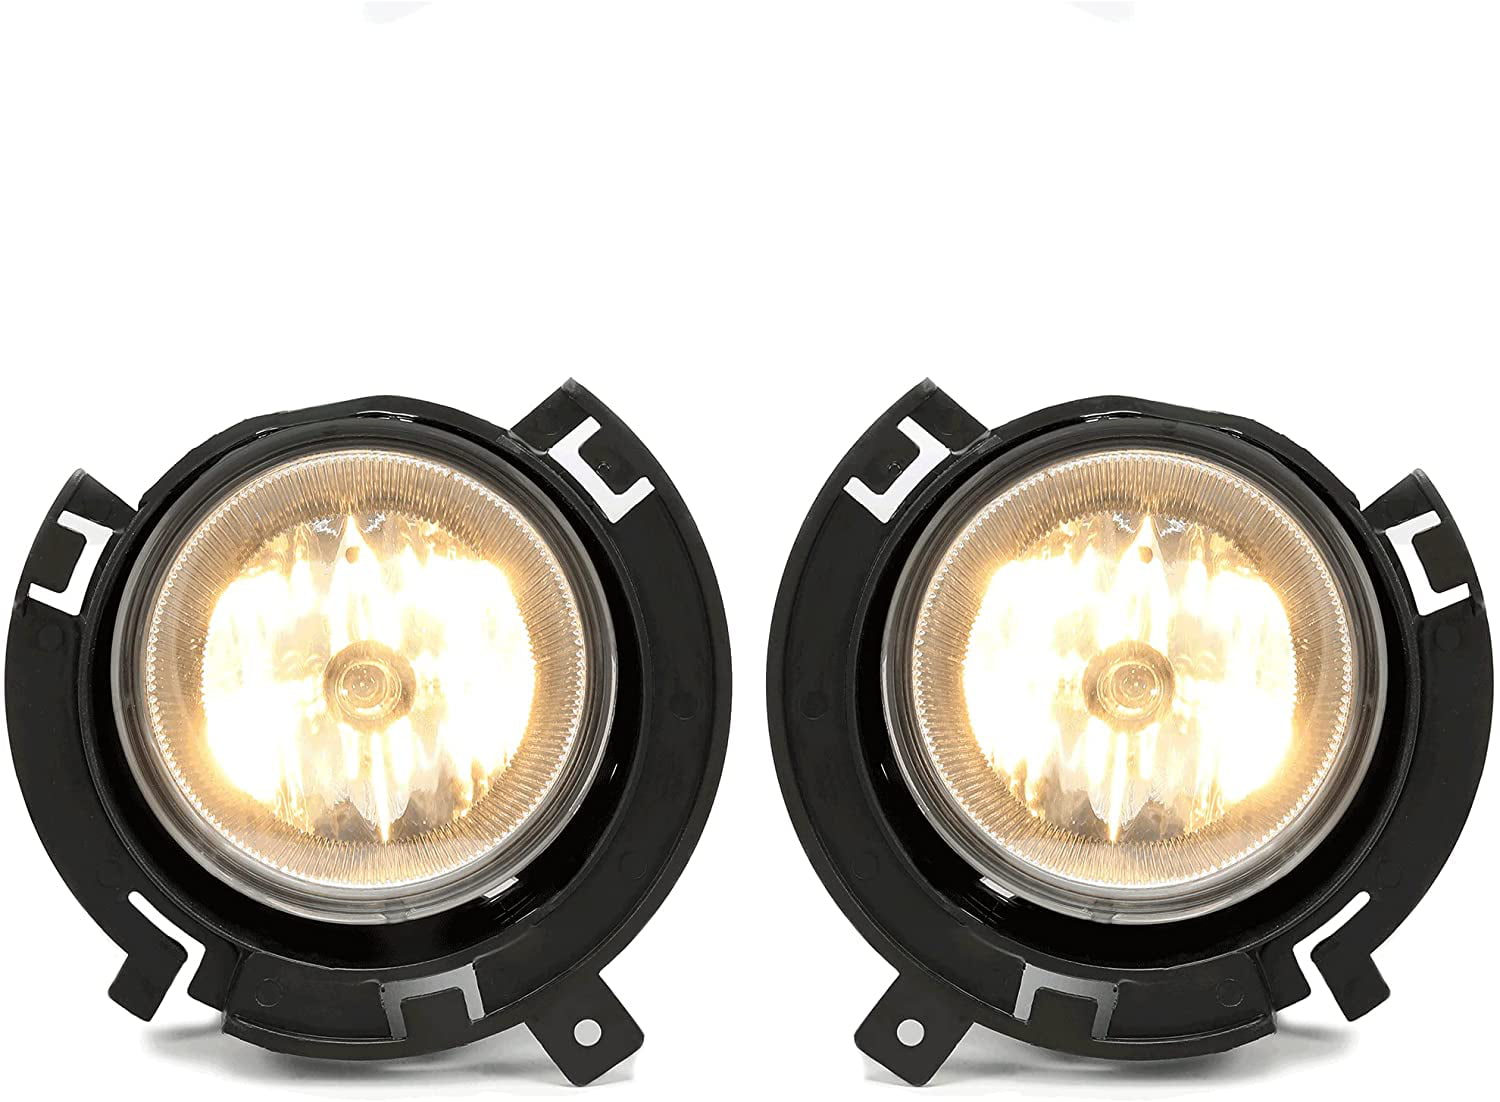 For 2011-2013 Dodge Durango Bumper Fog Lights Lamps Pair Left+Right 11 12 13